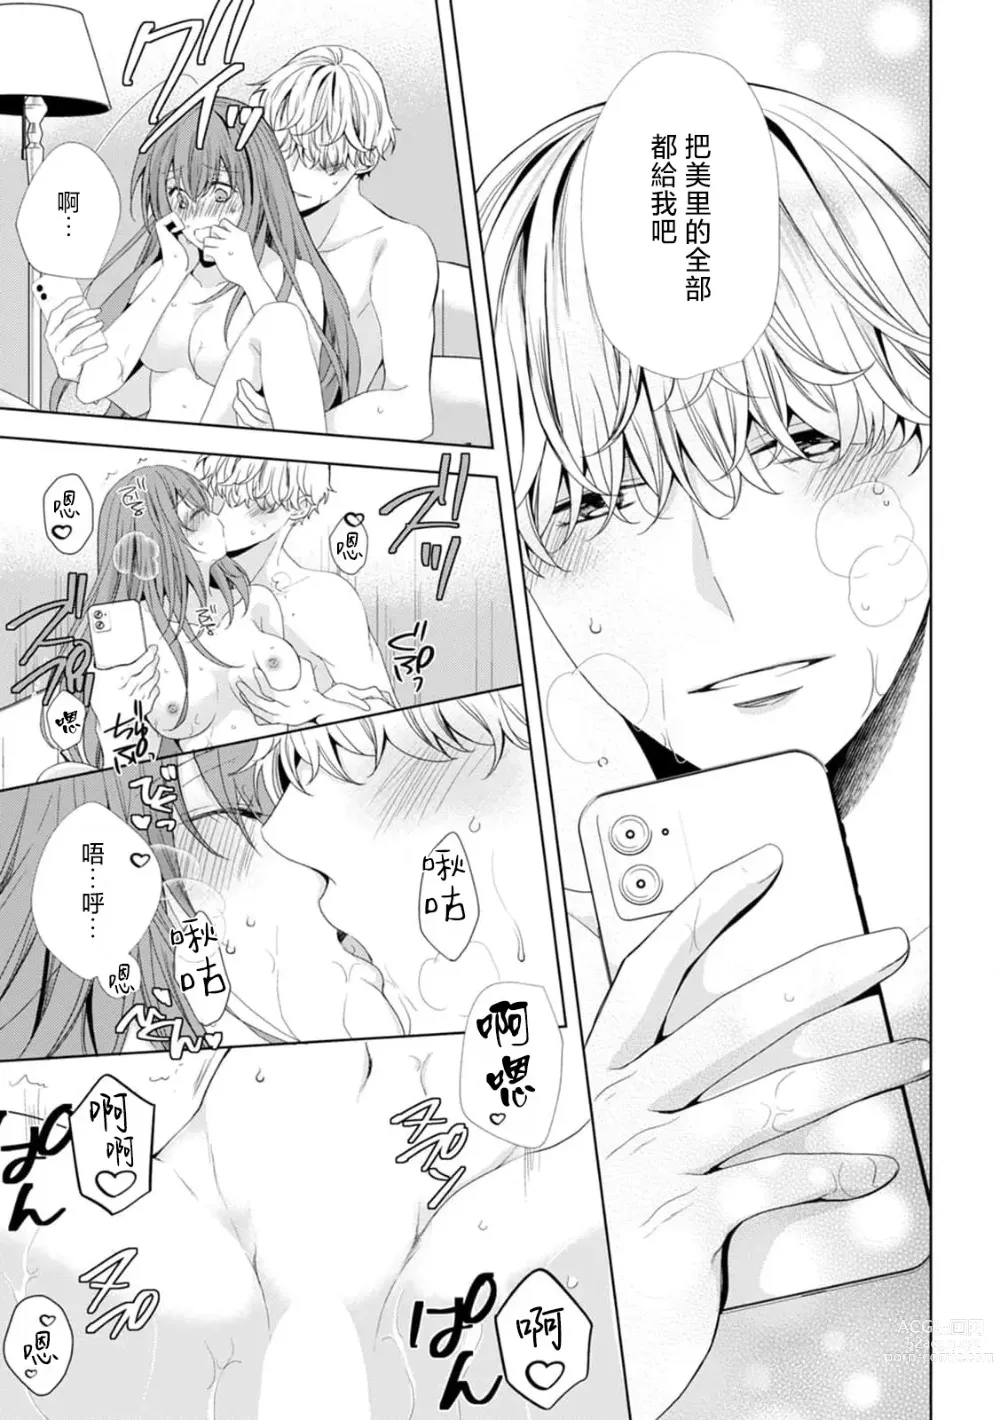 Page 12 of manga 性交摄影什么的明明不可以…却忍不住高潮了！